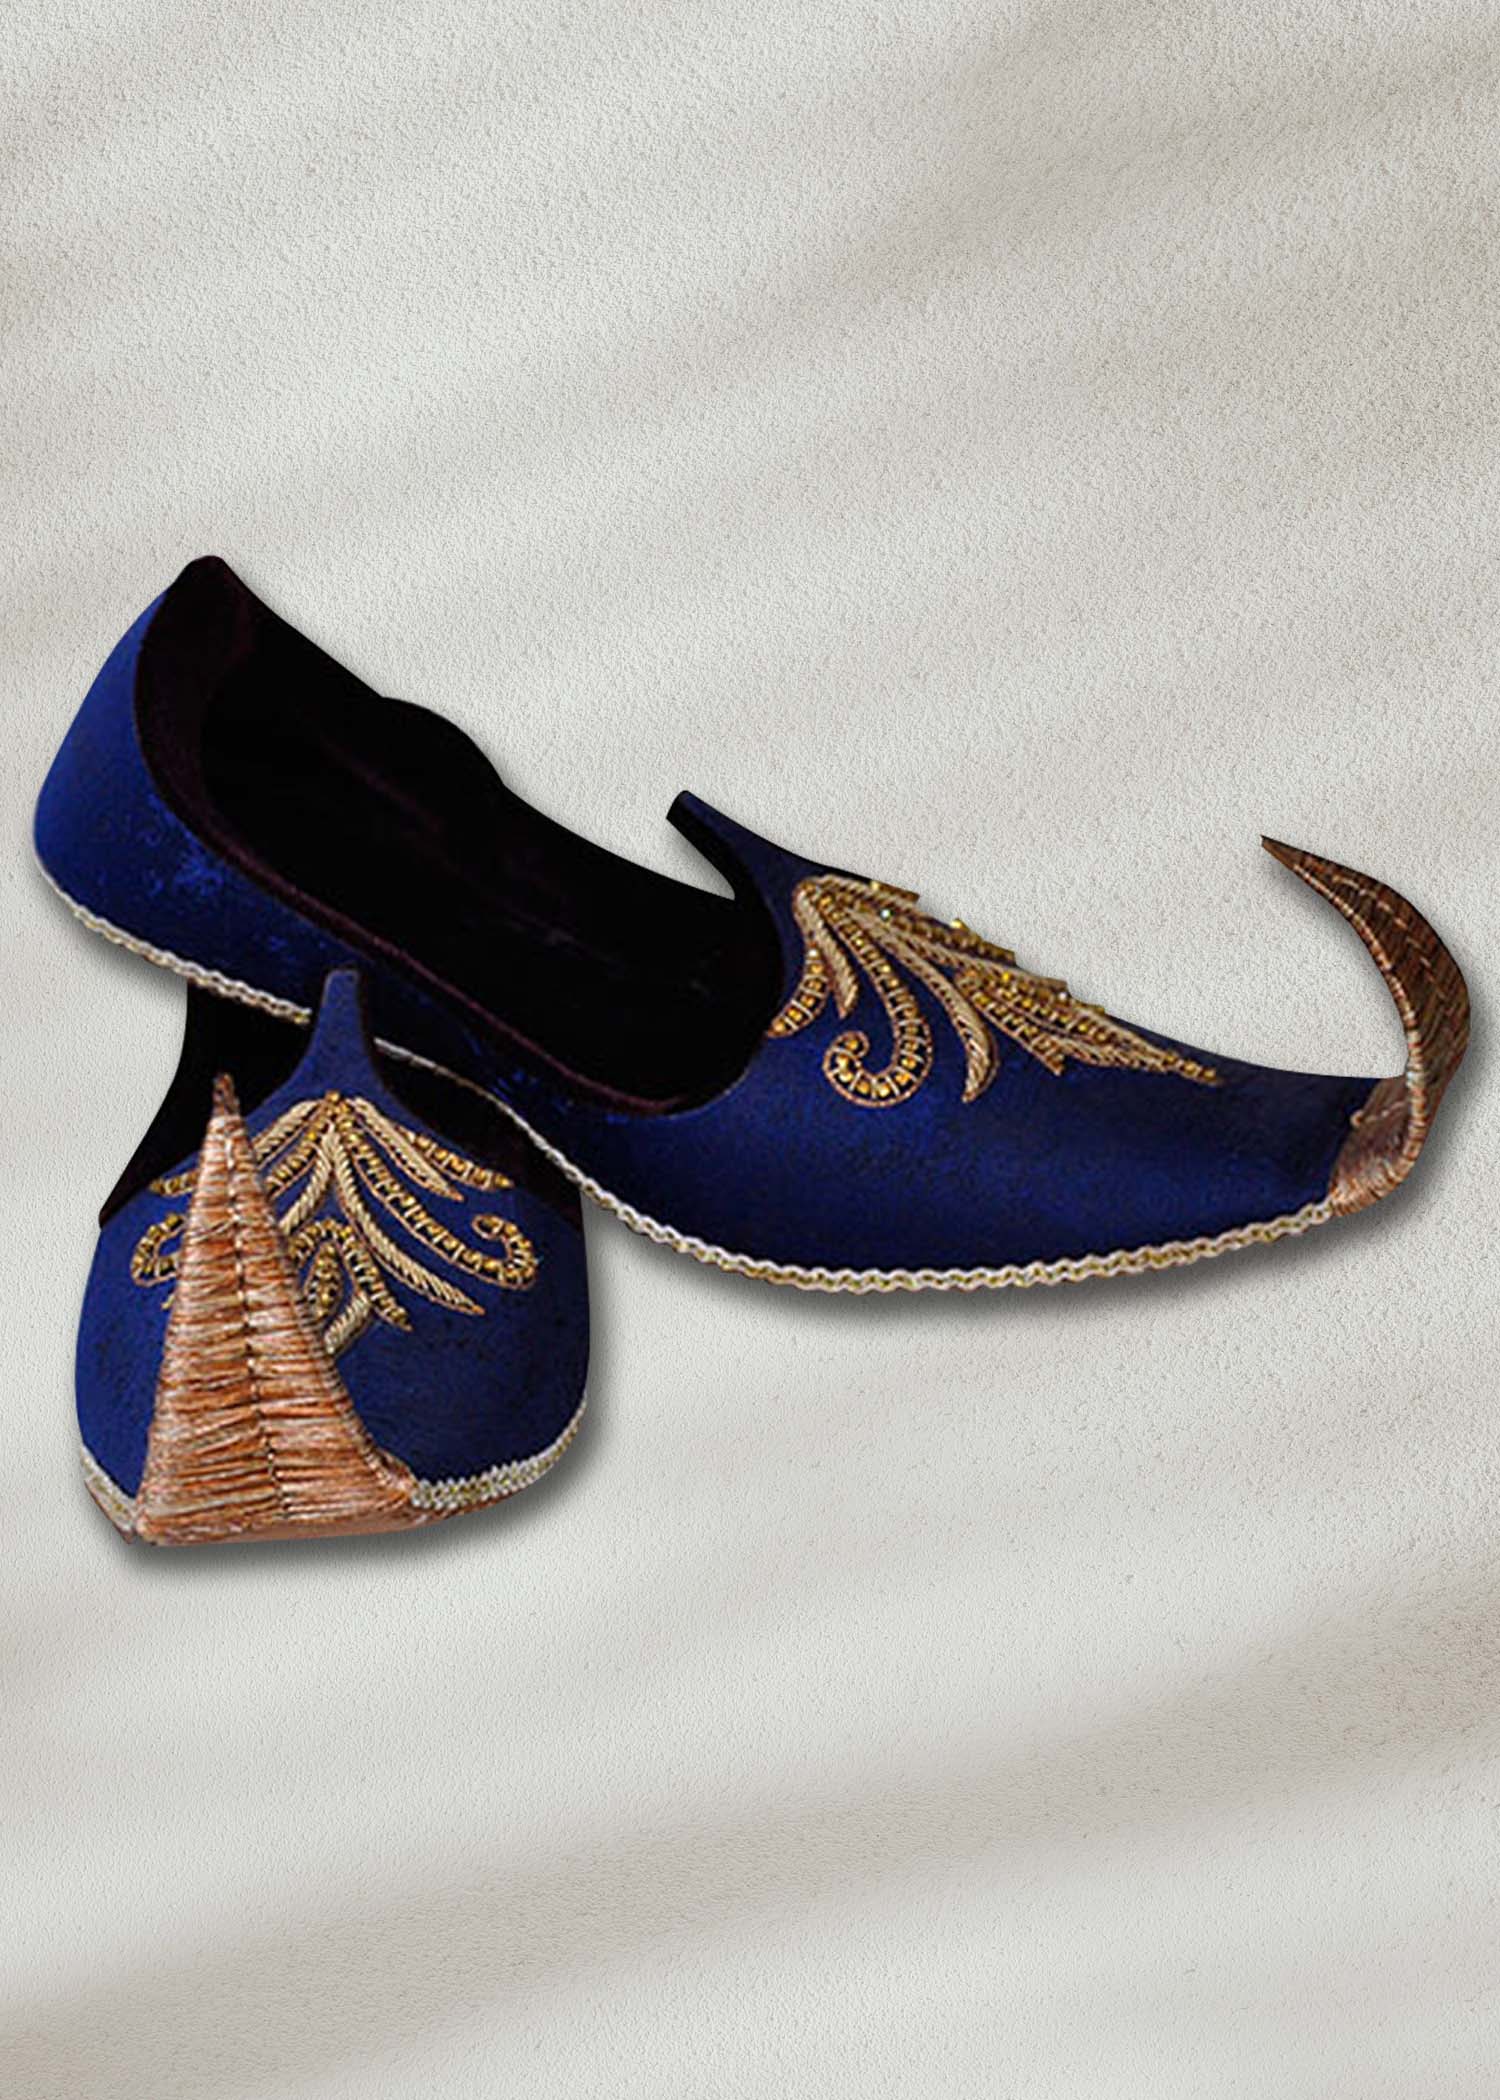 fancy khussa shoes